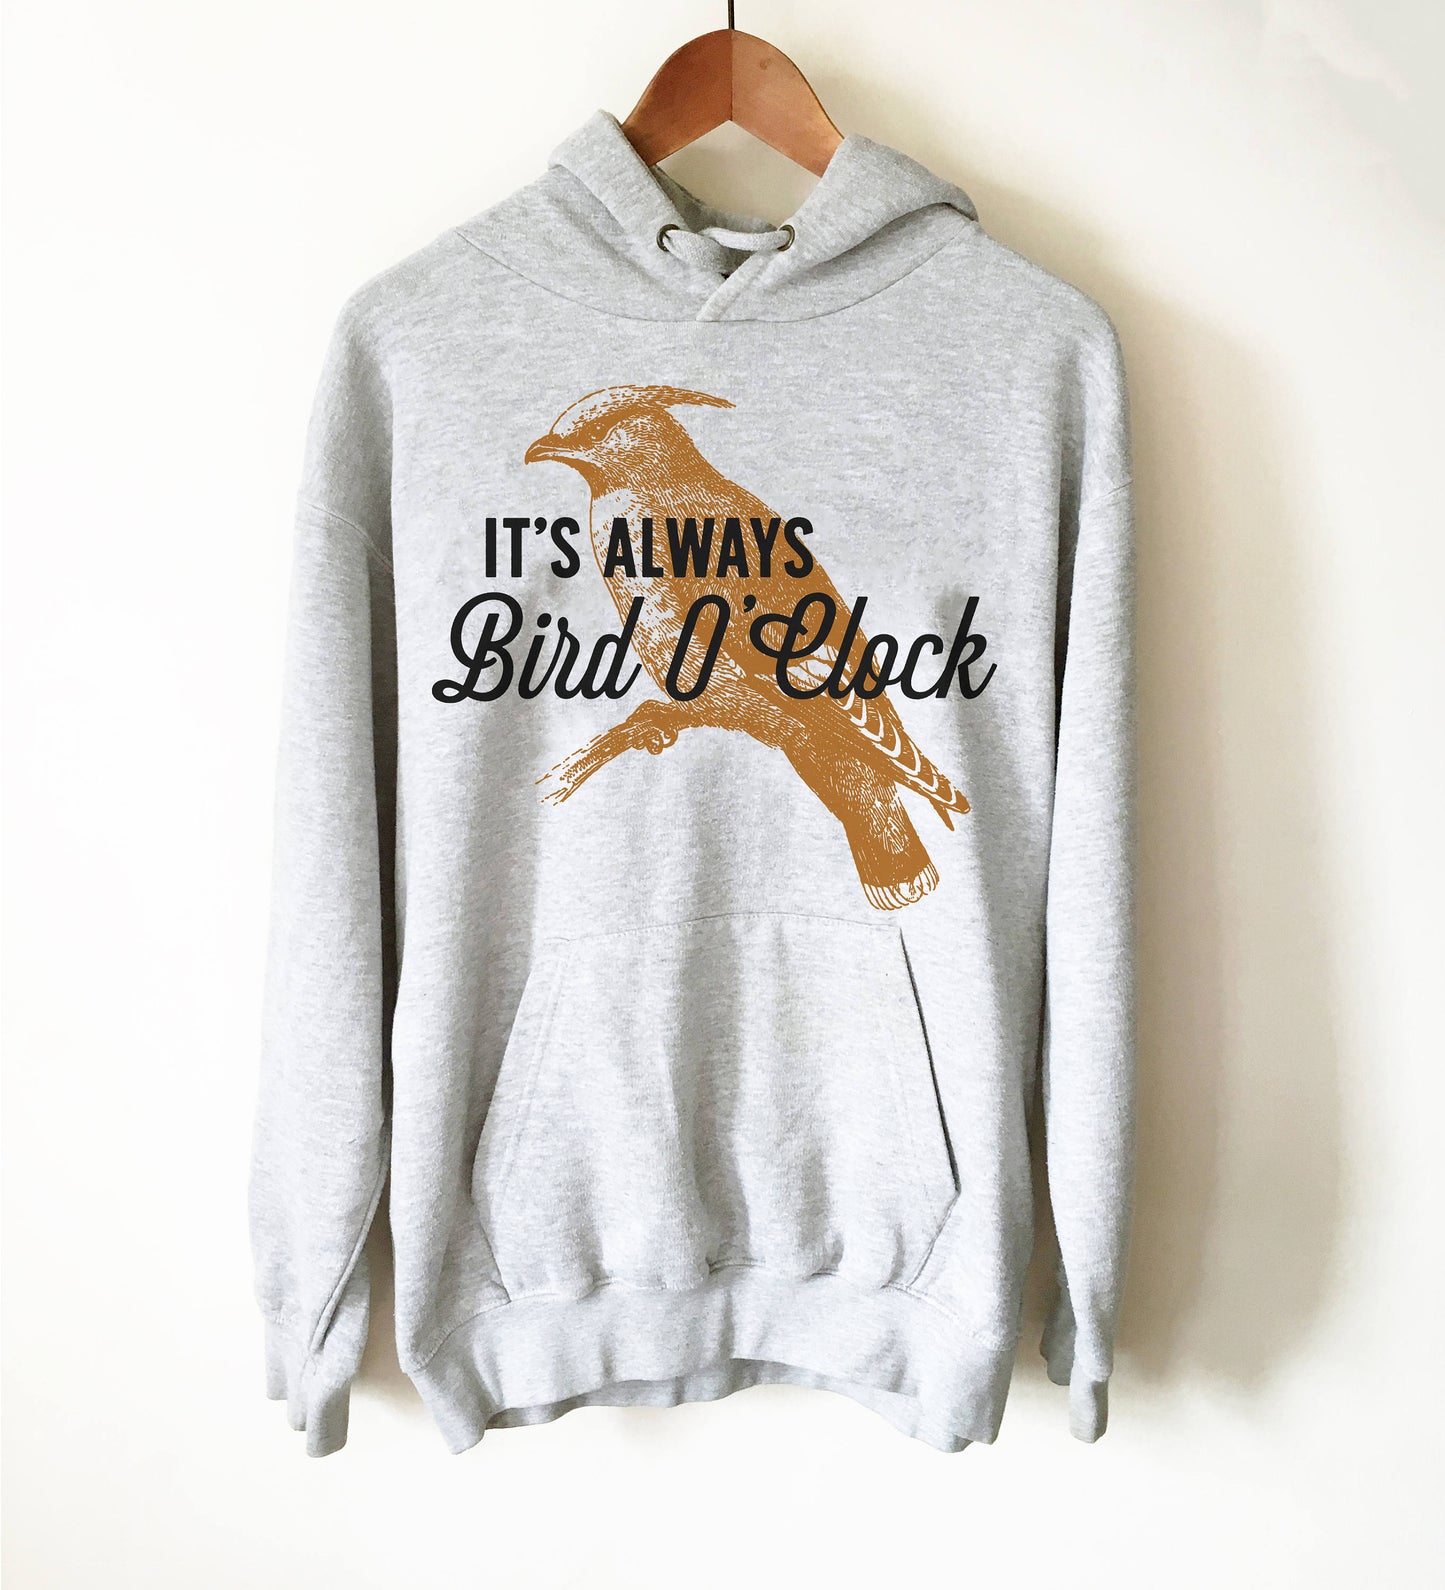 It's Always Bird O' Clock Unisex Hoodie - Bird watching shirt | Bird watching gift | Birding | Ornithology | Bird lover gift | Bird shirt